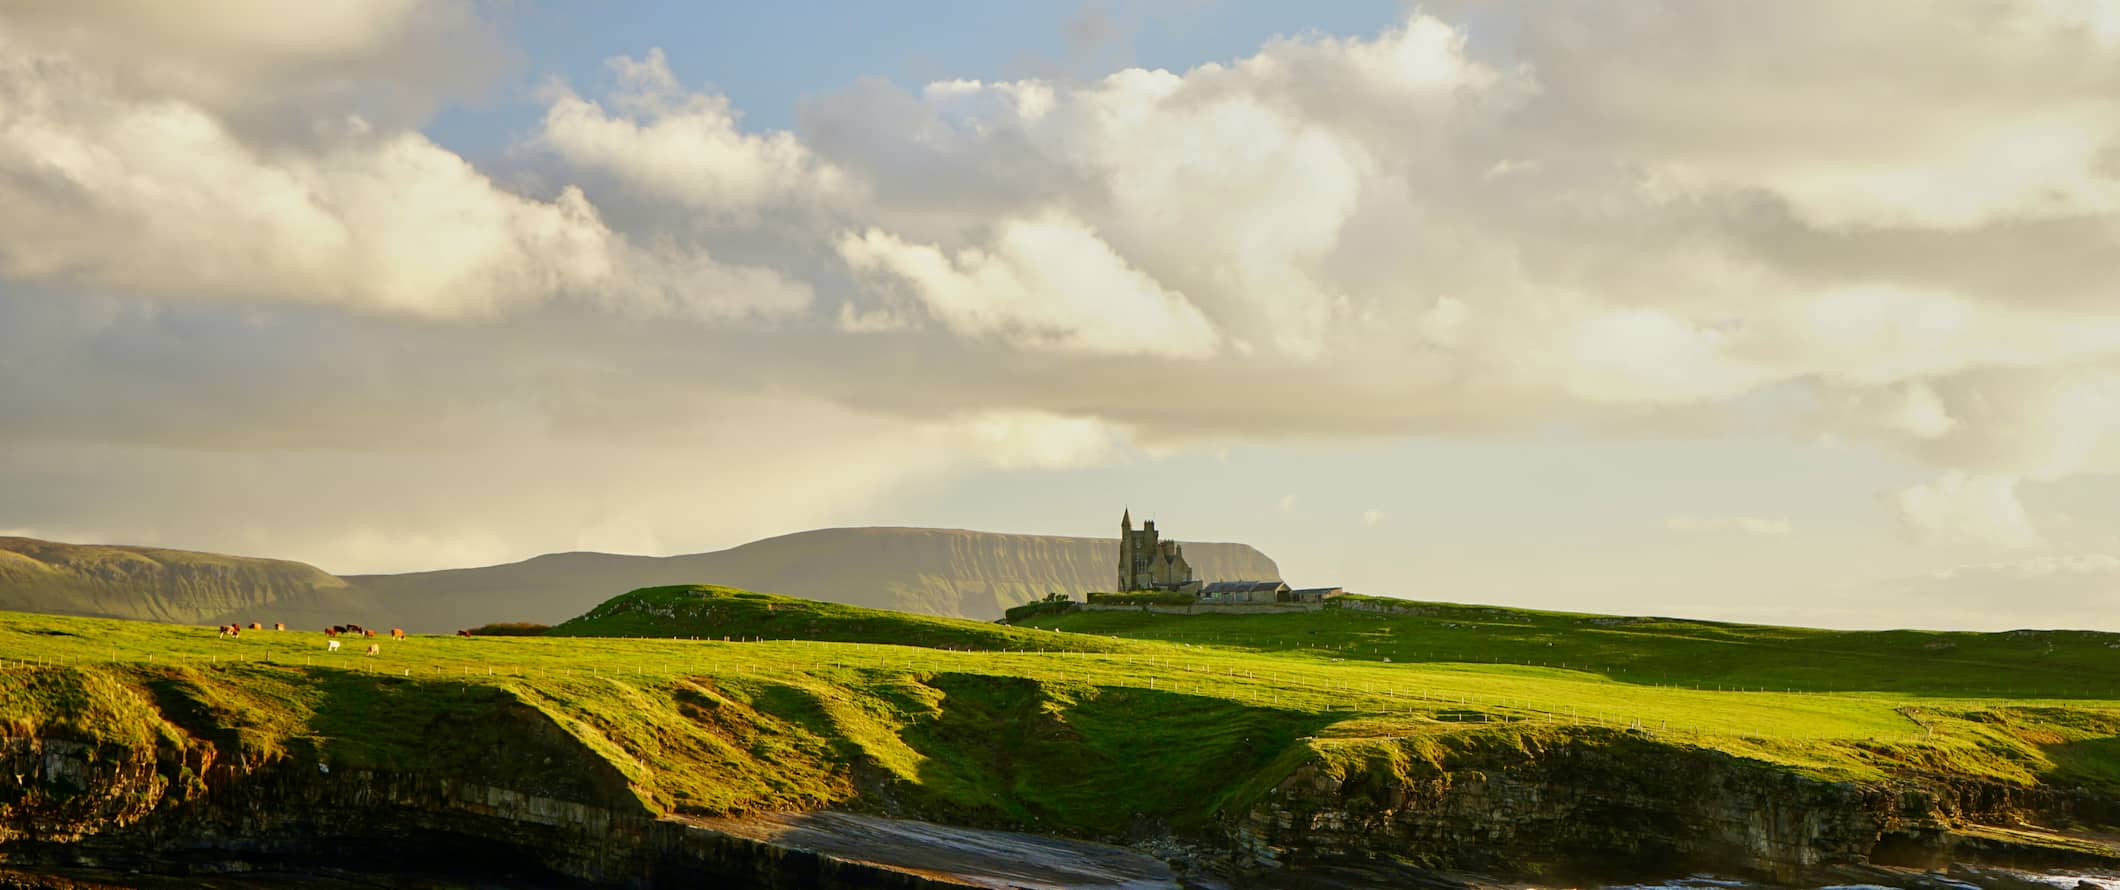 Castelo na zona rural irlandesa cercado por campos verdes